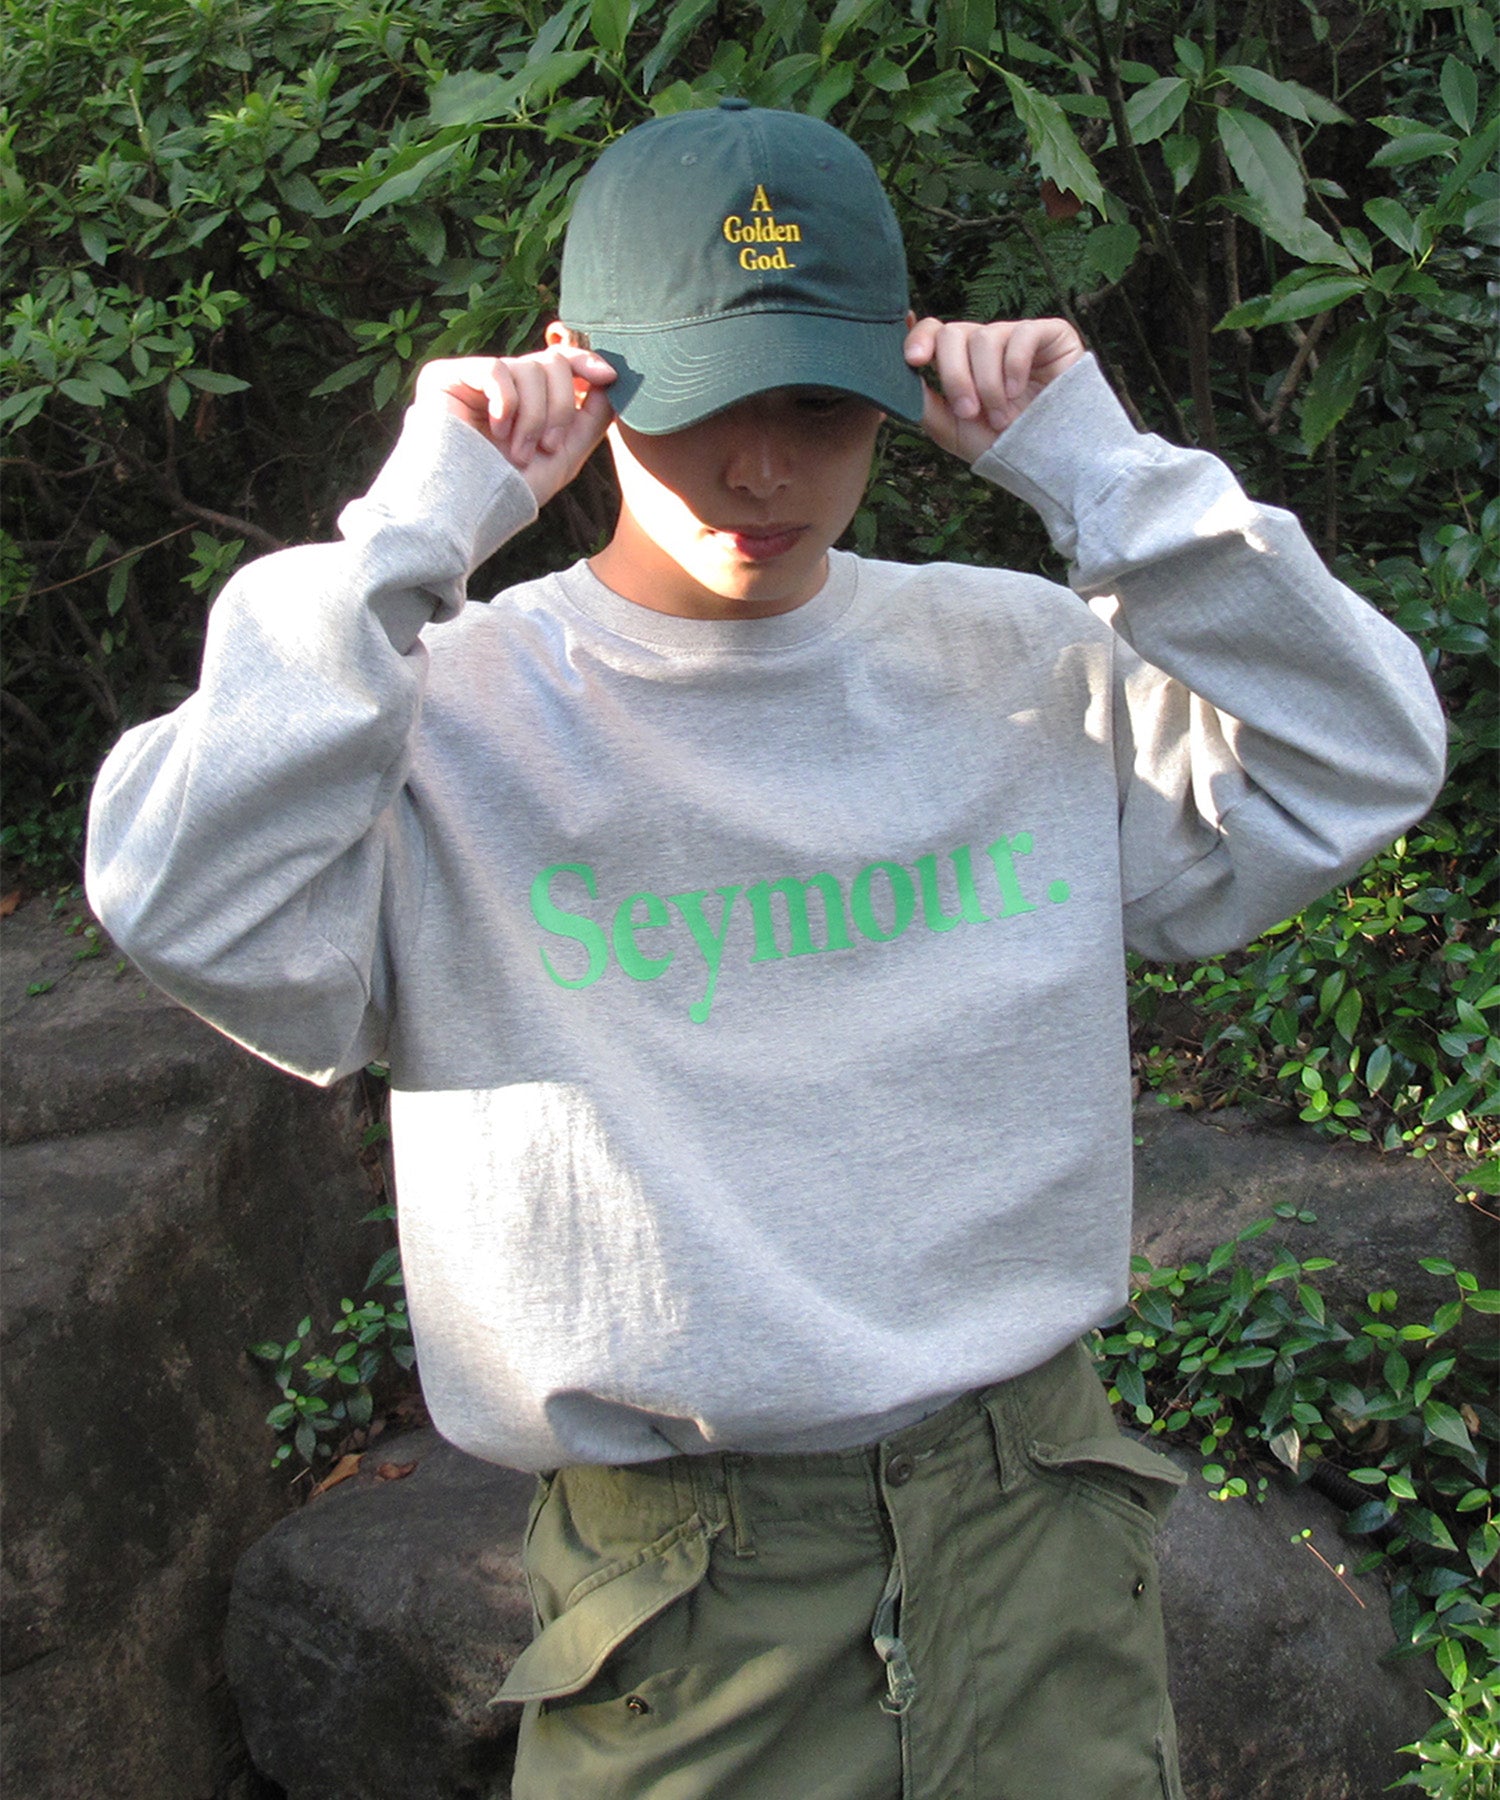 Seymour.“LOGO”厚重长袖 T 恤